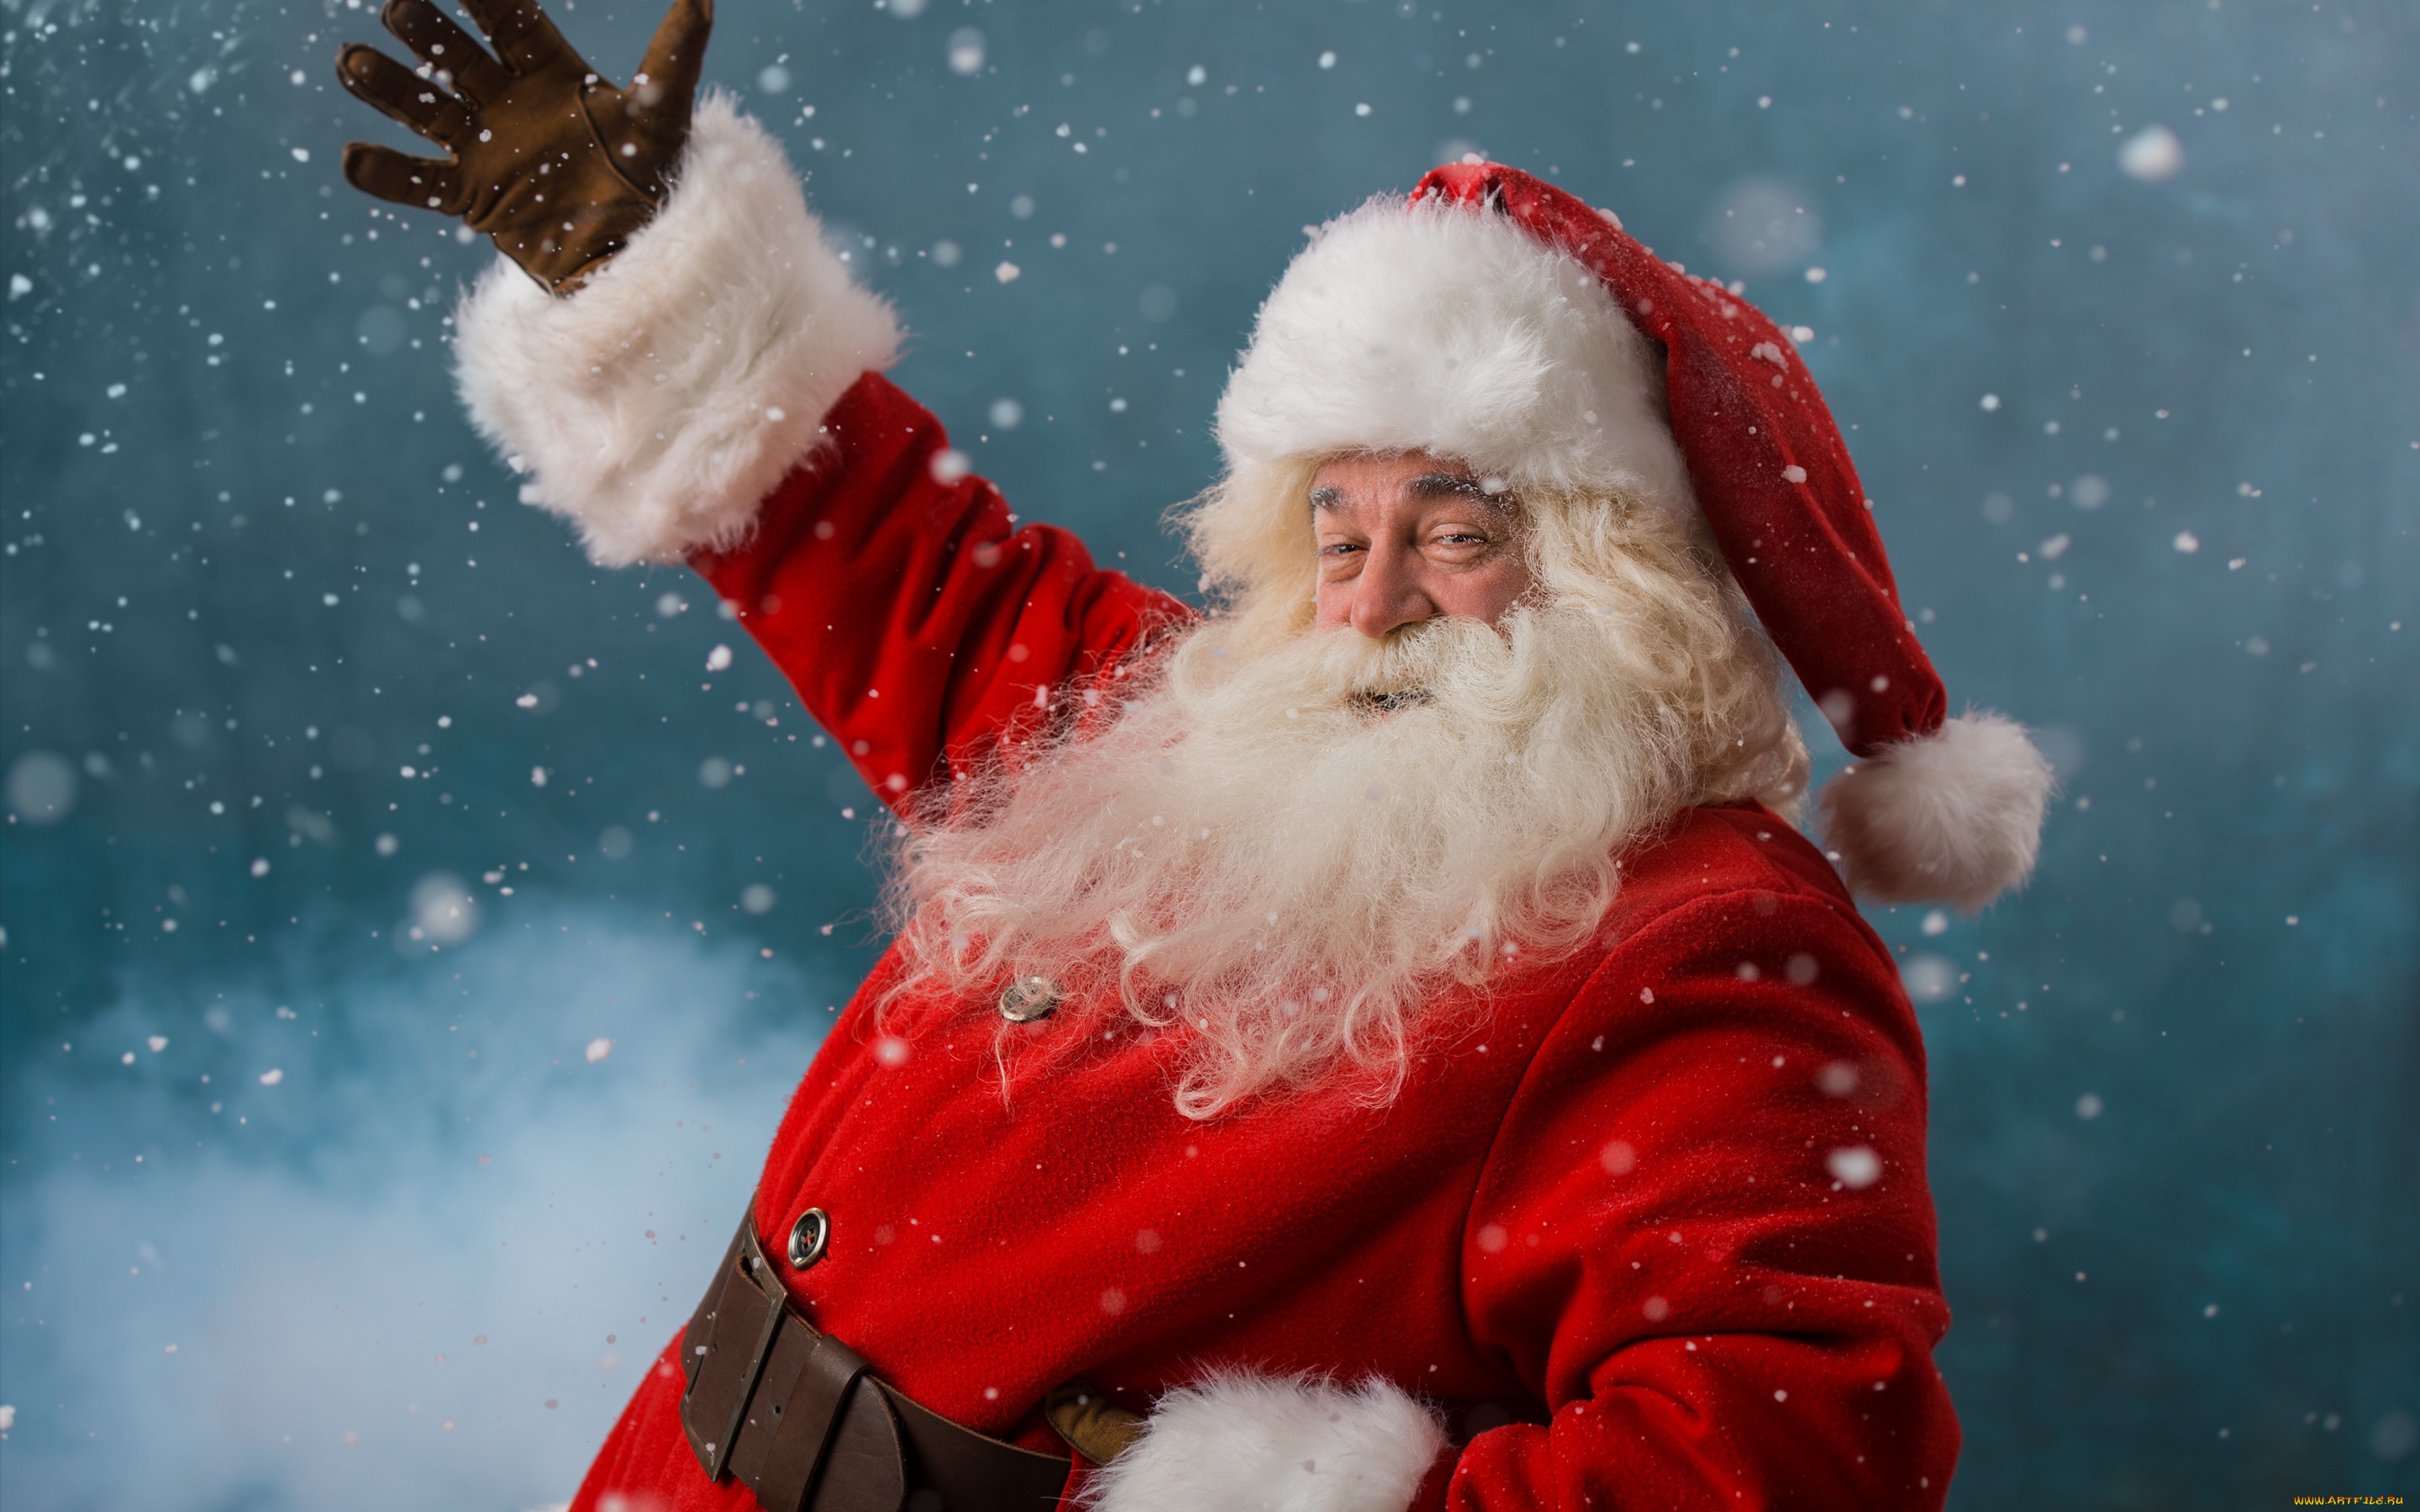 праздничные, дед, мороз, , санта, клаус, зима, снег, новый, год, рождество, санта, клаус, дед, мороз, christmas, winter, snow, new, year, santa, claus, xmas, merry